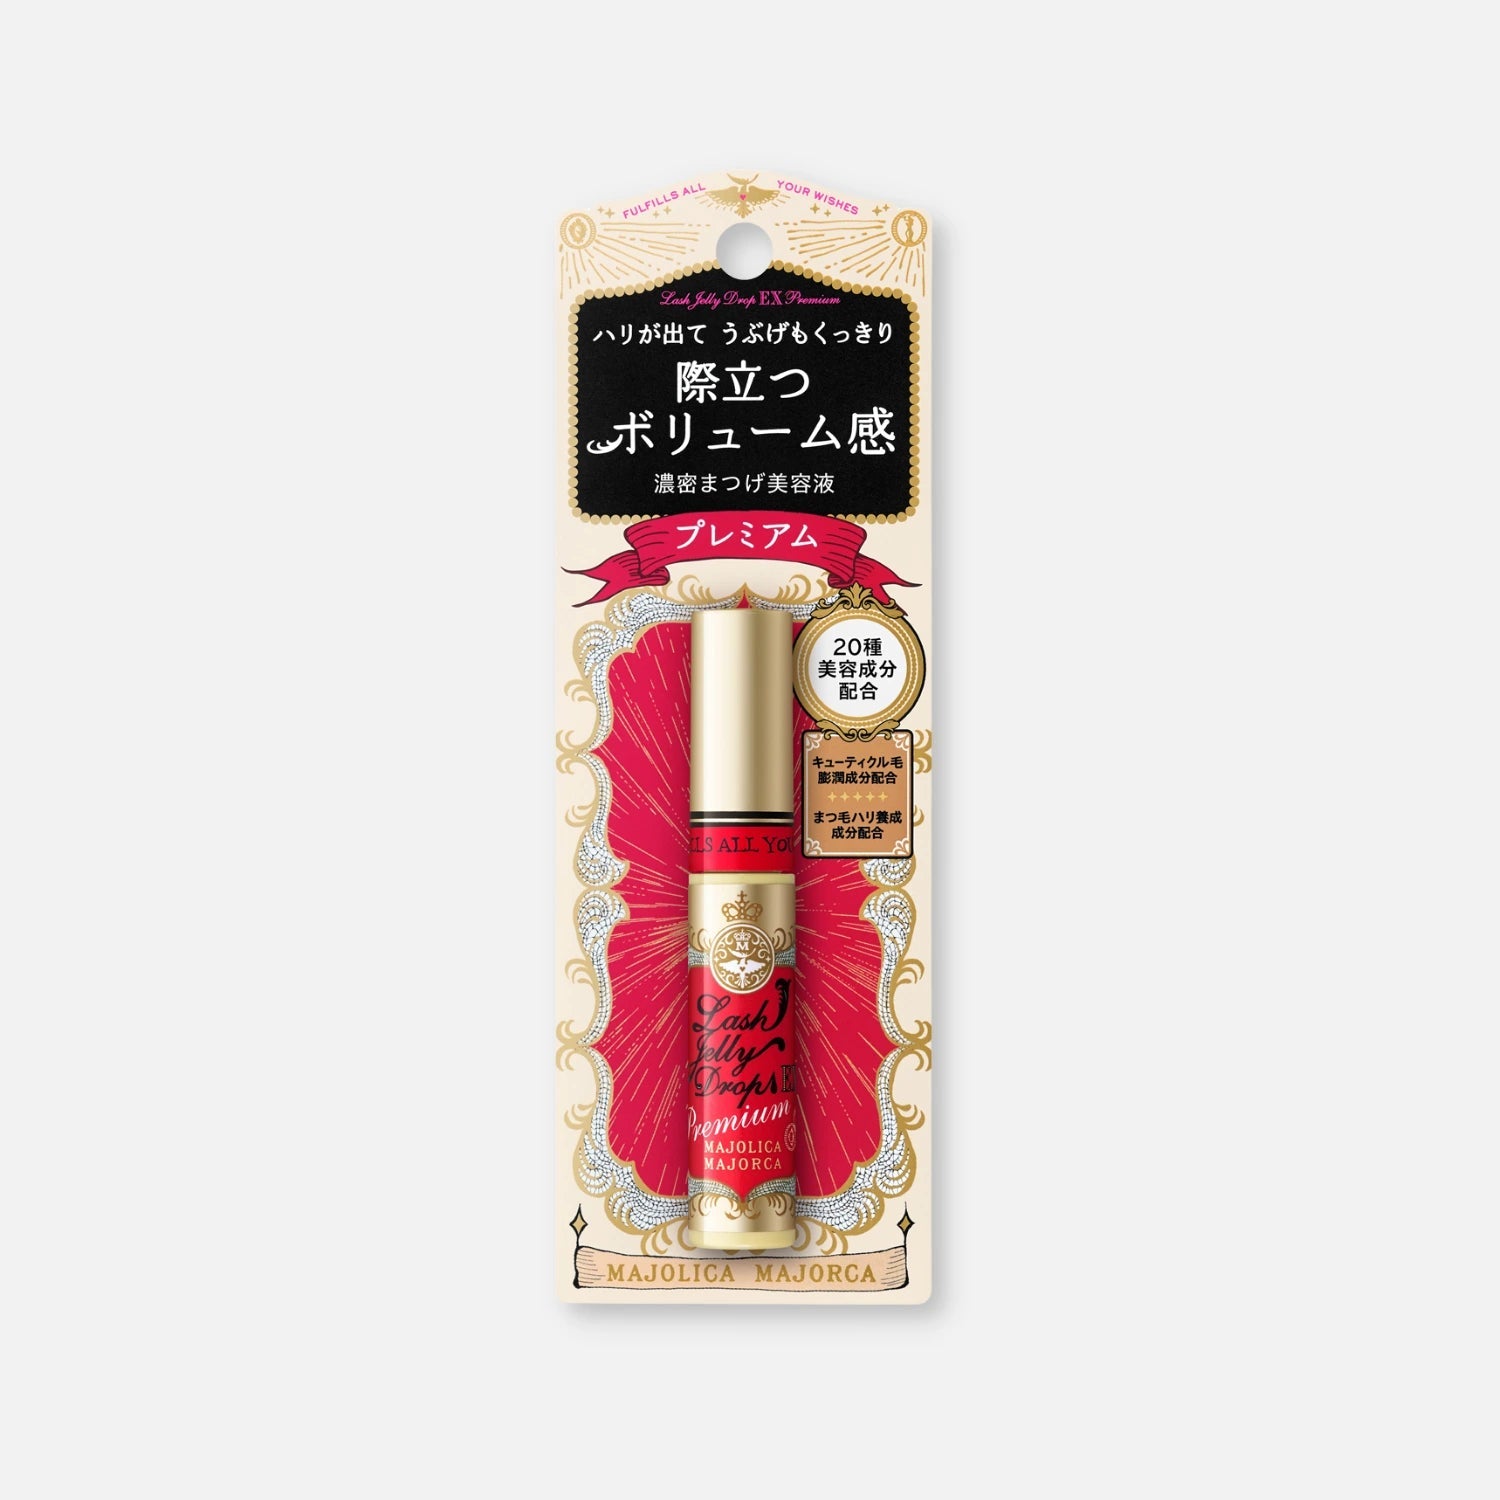 Majolica Majorca Lash Jelly Drops EX Premium 5.3g - Buy Me Japan